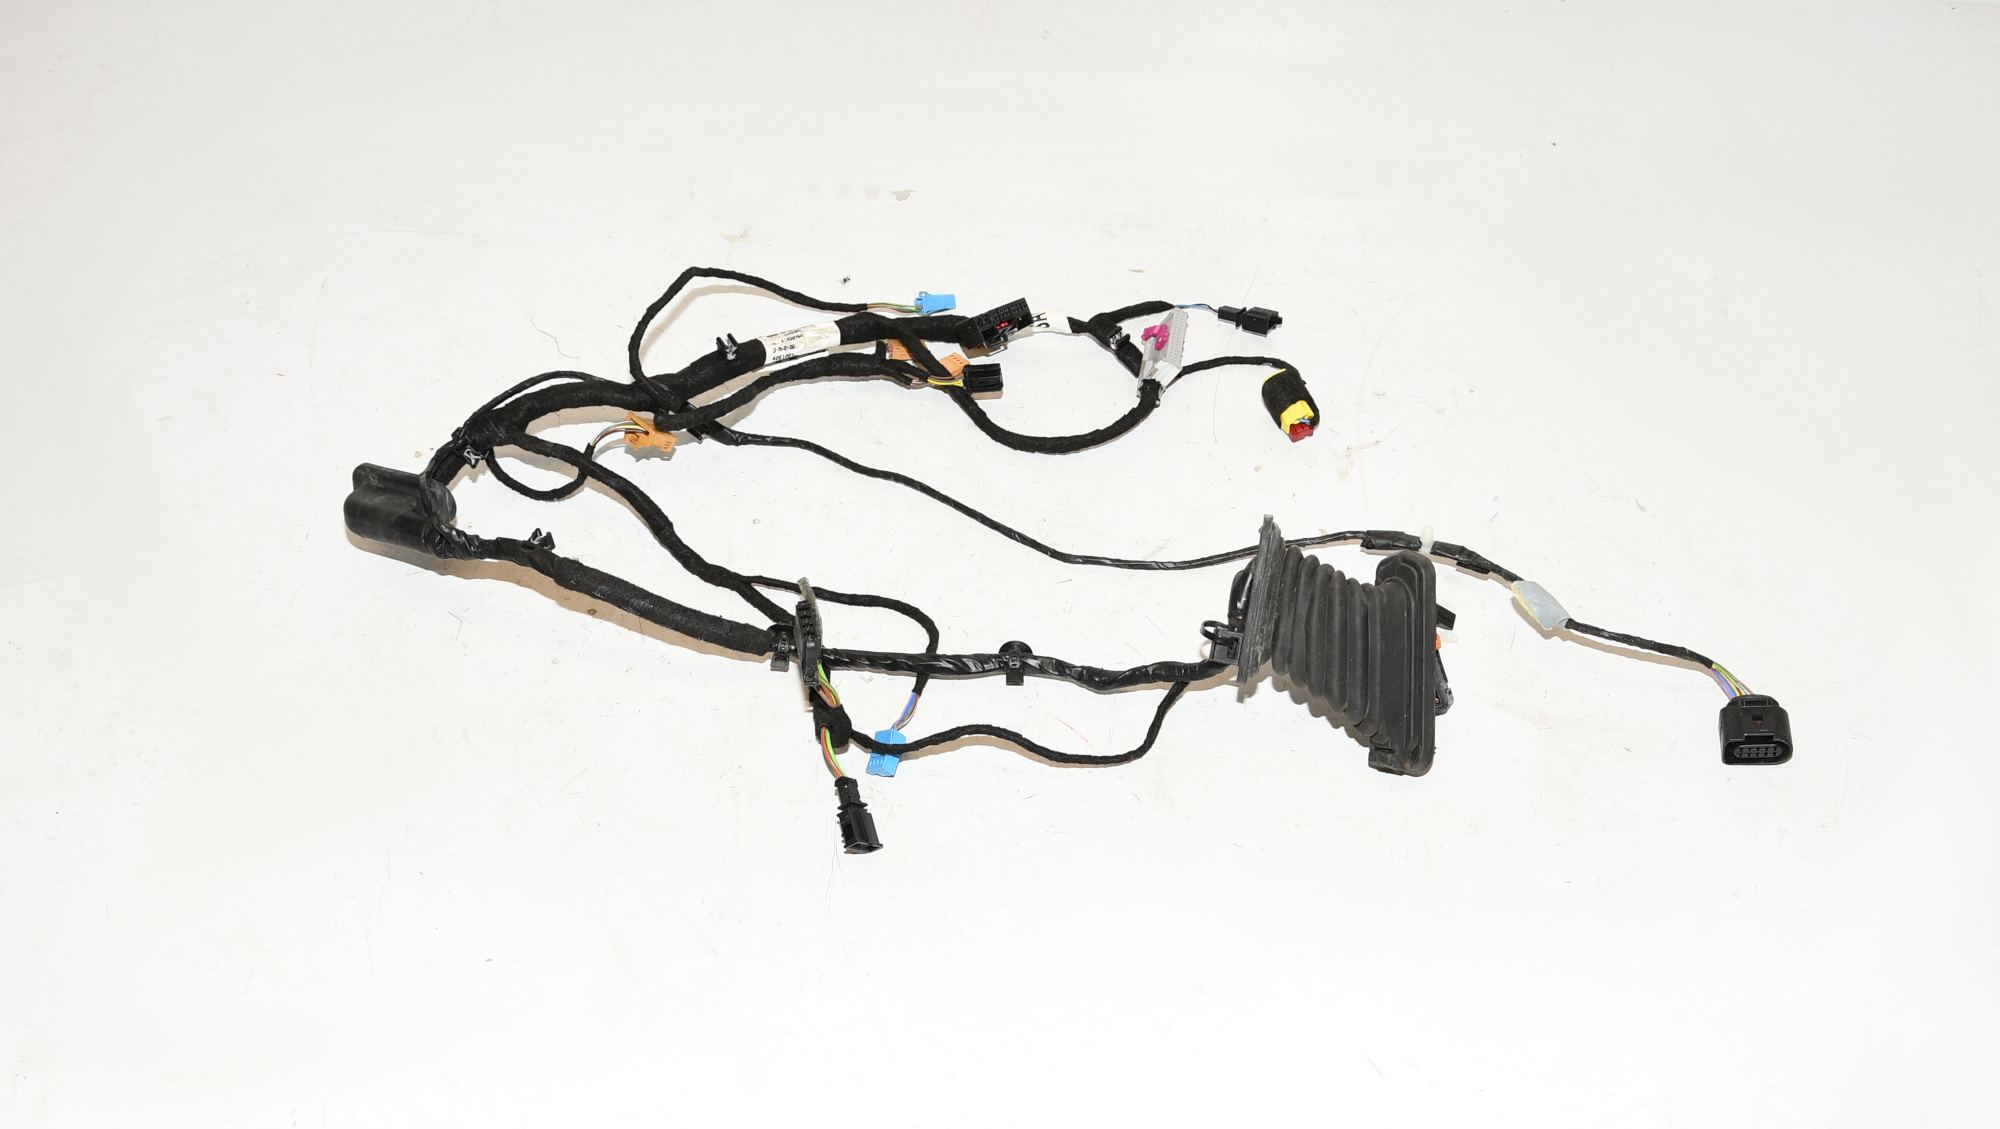 Faisceau de câblage jeu de câblage porte gauche 1Q0971120BC EOS original VW 